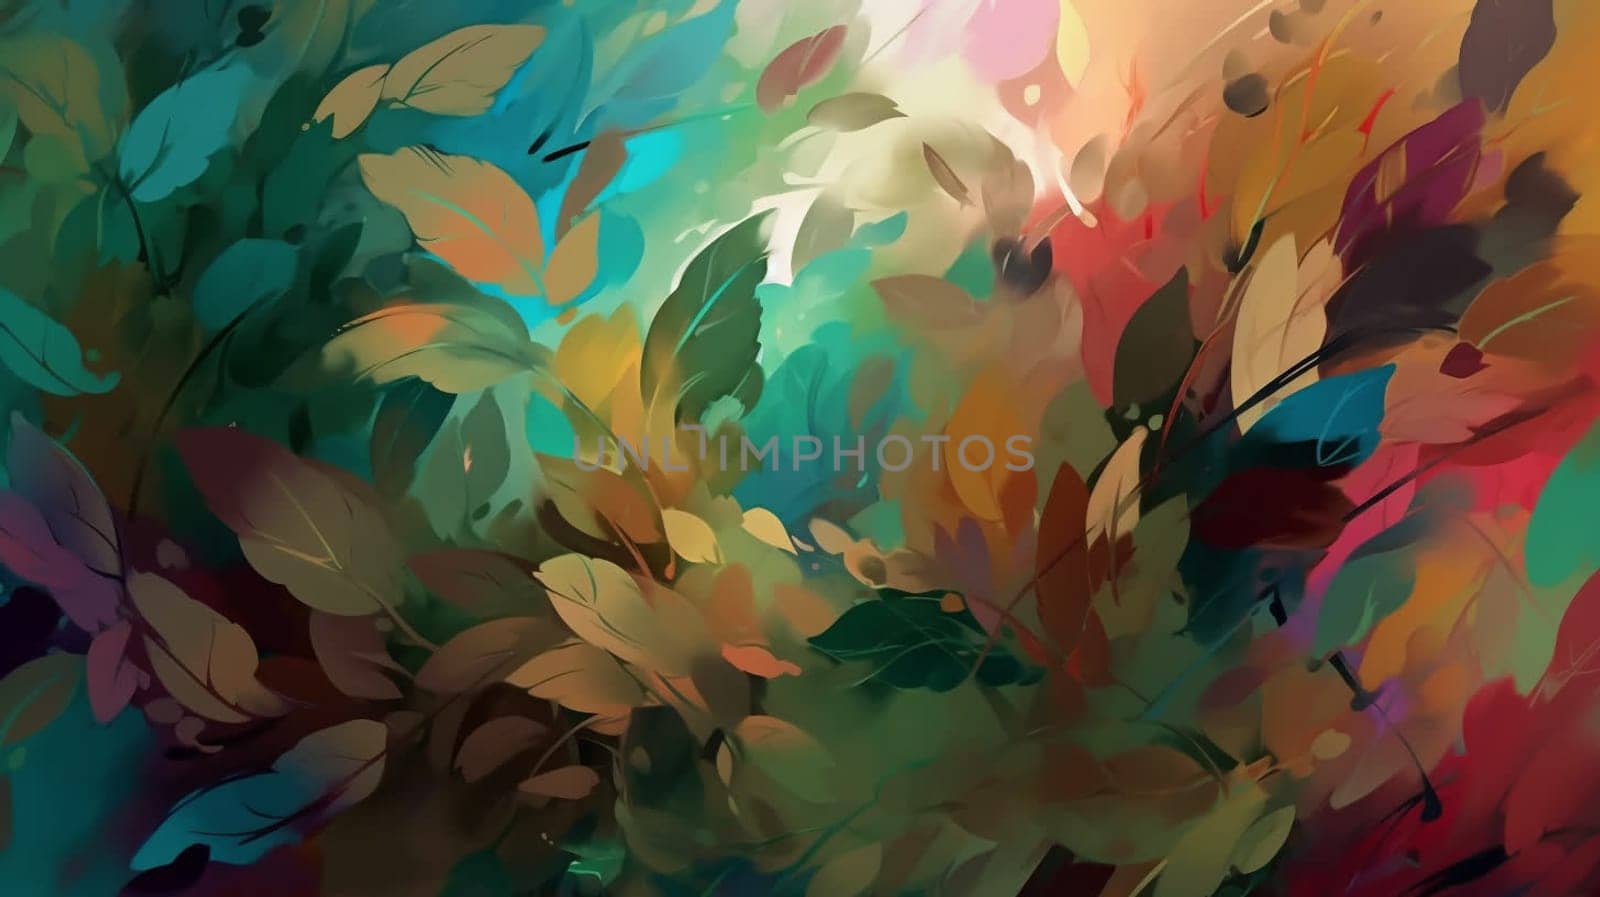 Polygonal image of colorful autumn foliage. High quality illustration